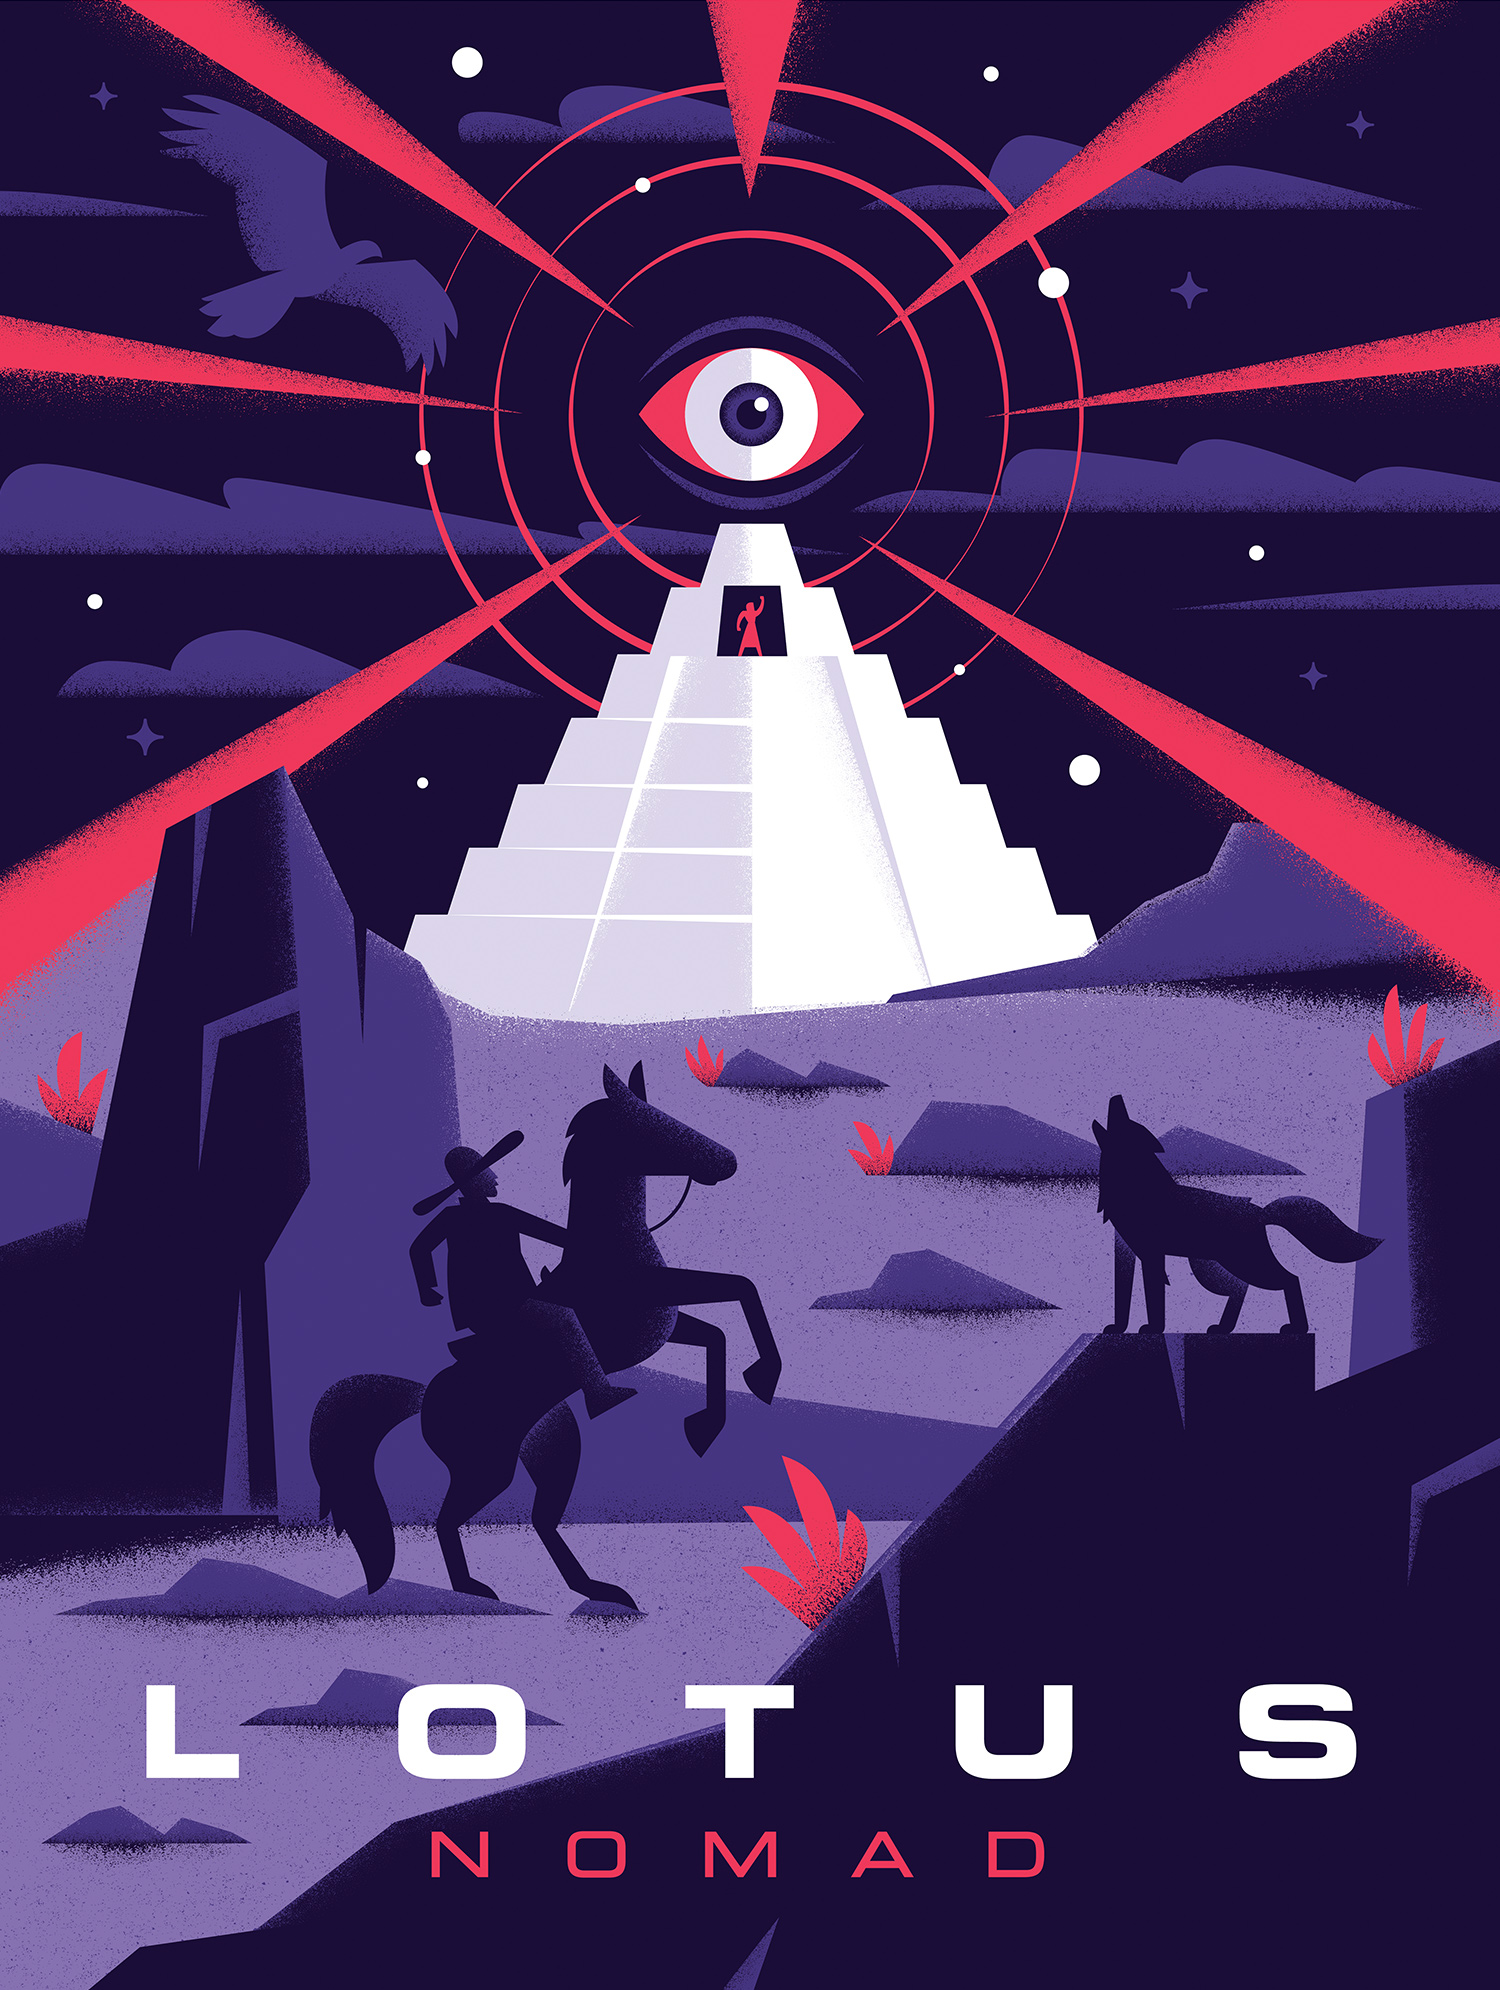 Lotus band Nomad poster design by Carl Bender